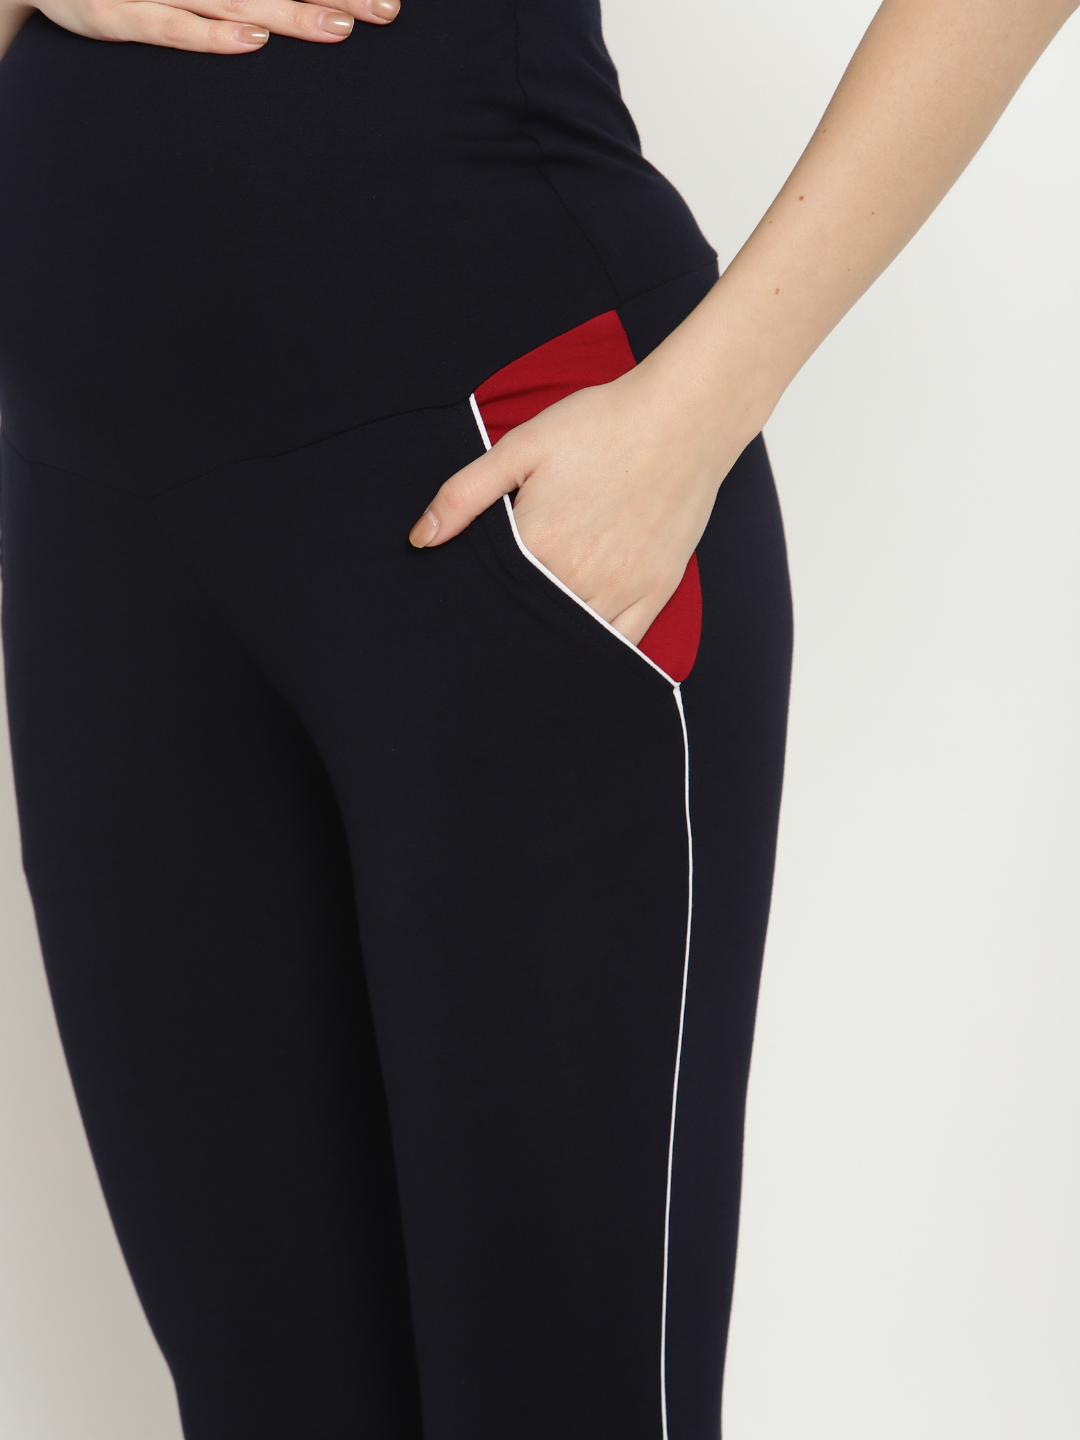 JUST LOOKIT Ladies Fashion Women's Cotton Leggings Combo Pack 3  (White,Black,RED) Maternity Wear Legging (Red, White, Black) XXL